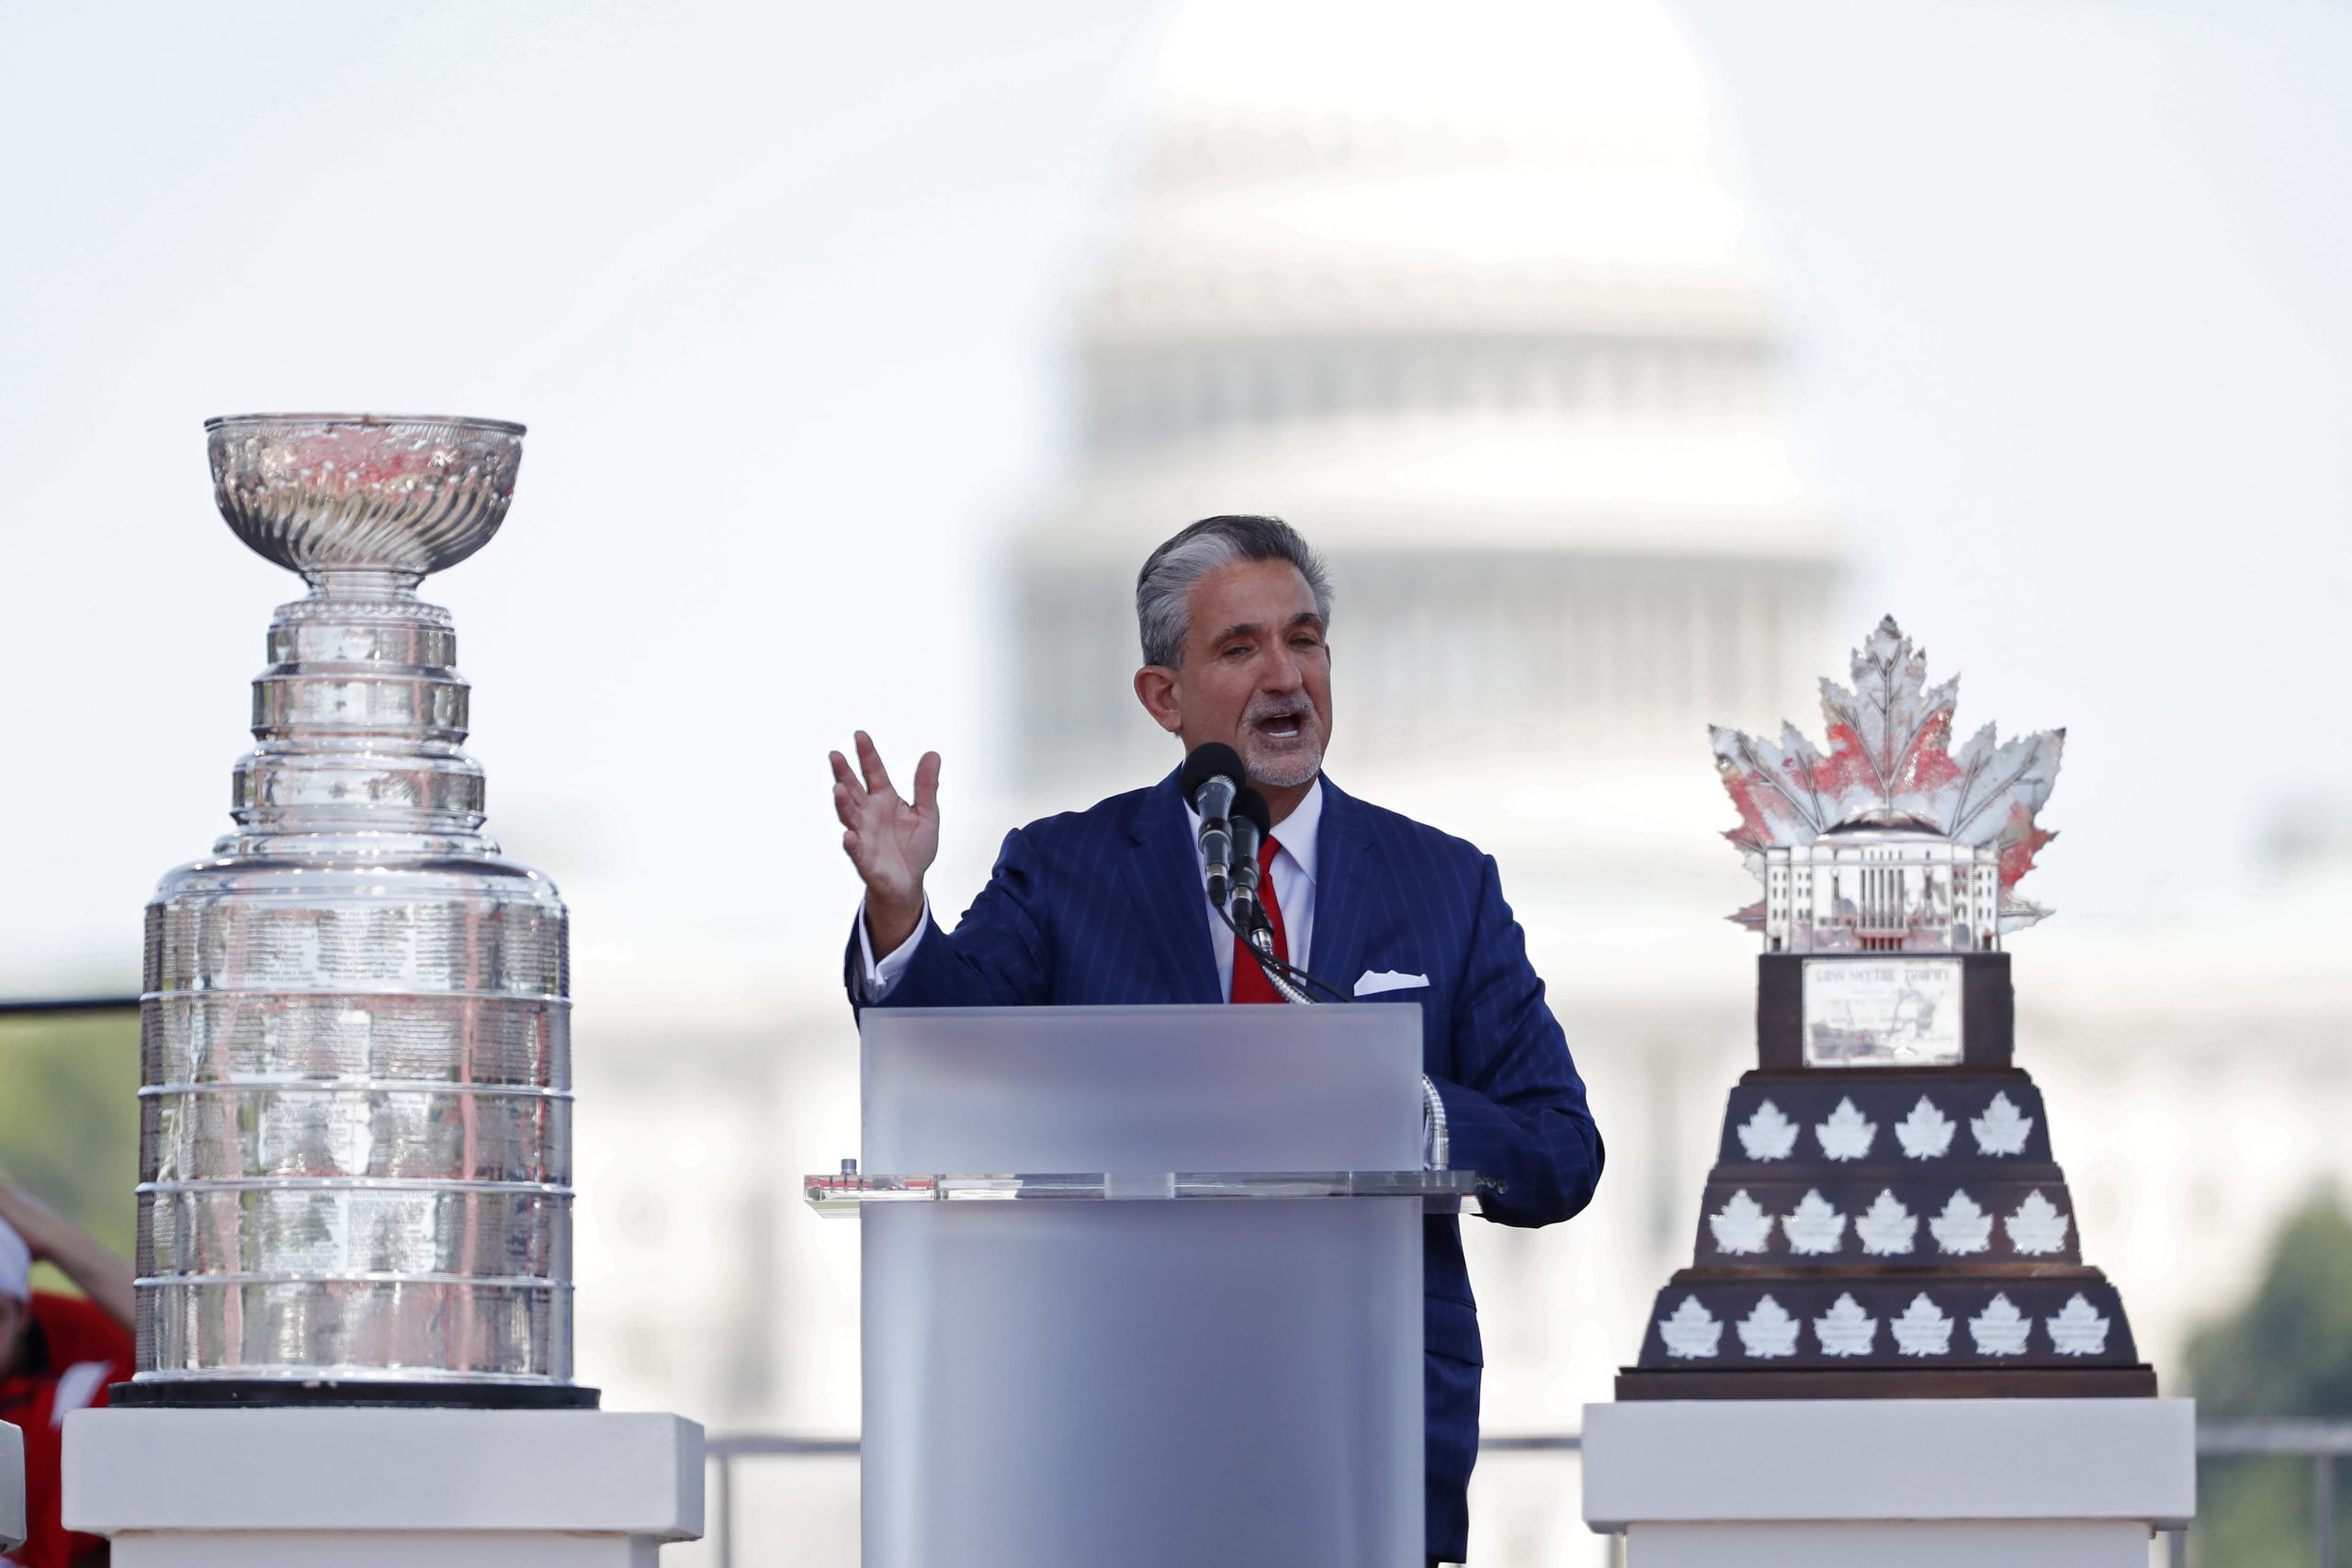 NHL: Washington Capitals-Stanley Cup Championship Parade